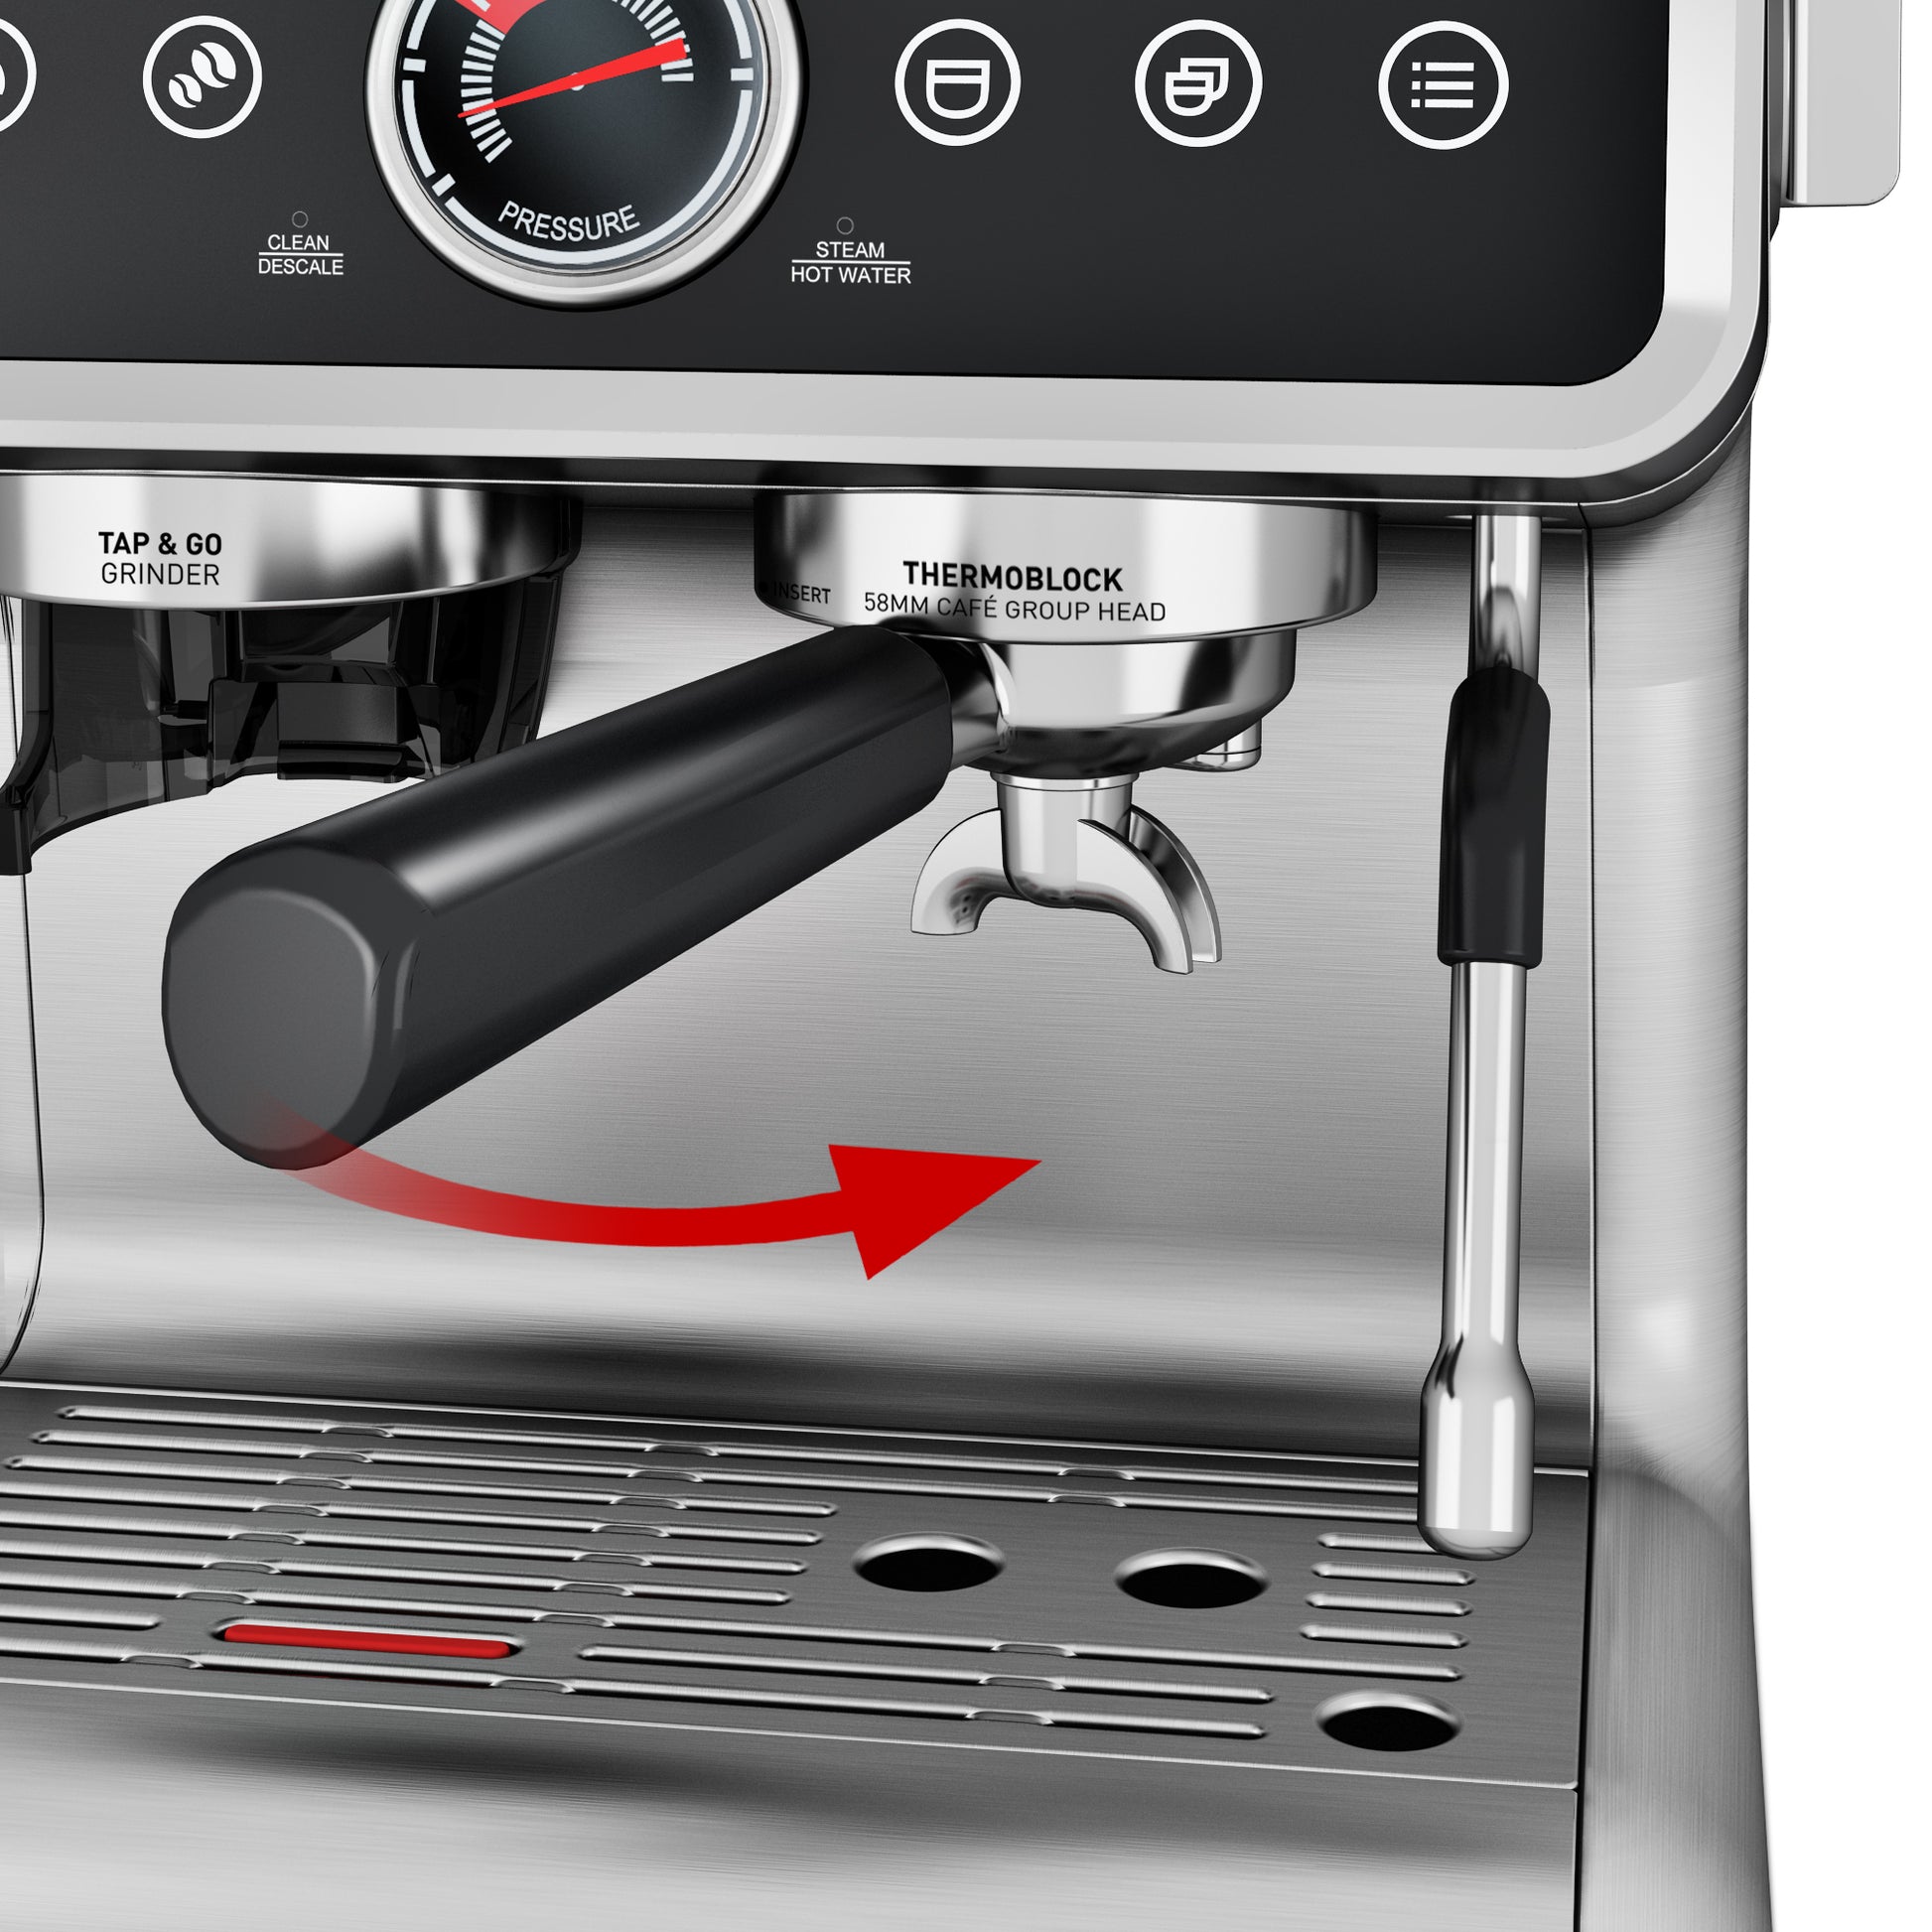 <img src="espresso machine.jpg" alt="wirsh espresso machine pre infusion"/>